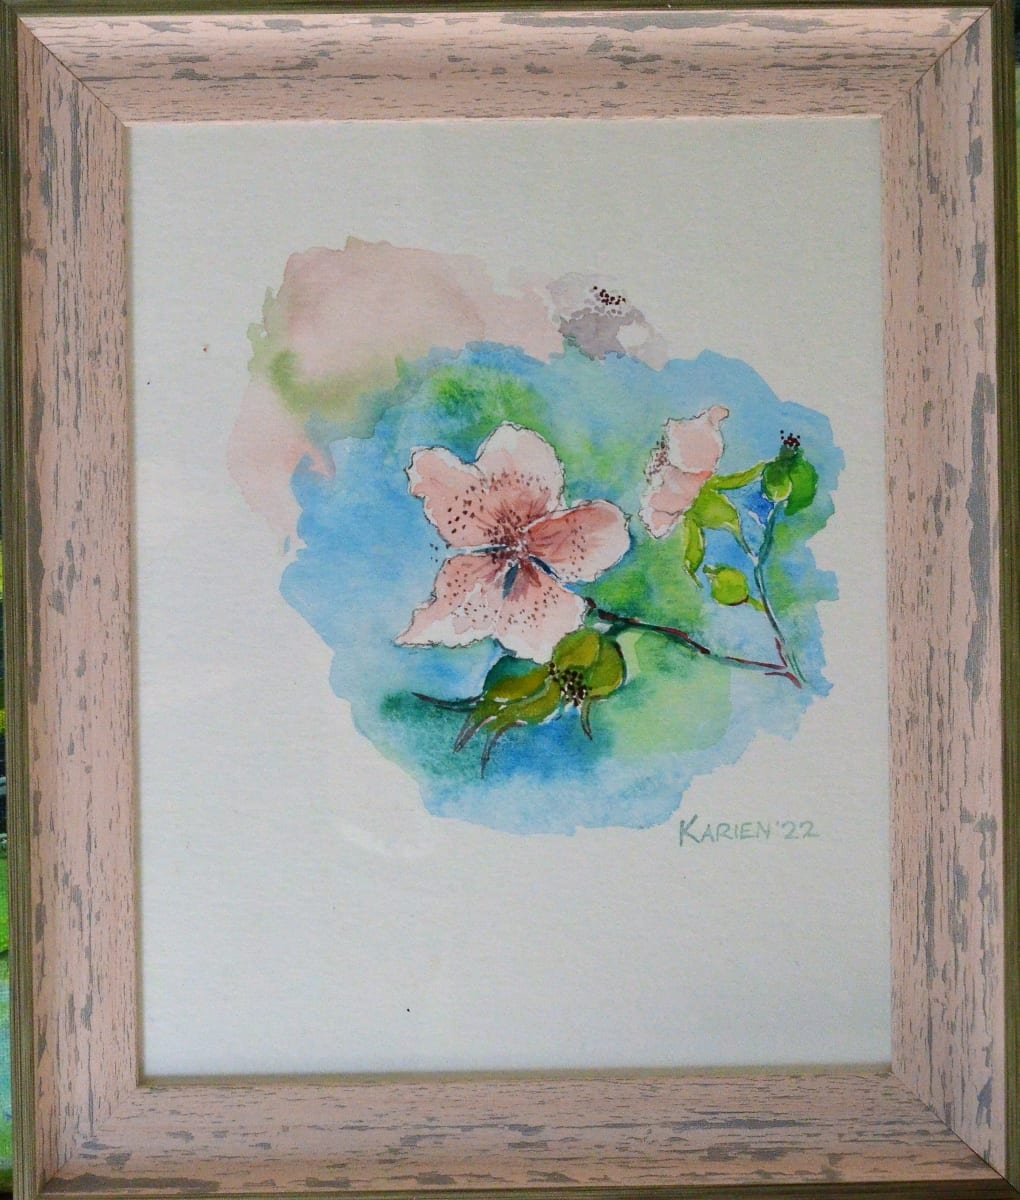 Blossom by Karien Dutton  Image: Blossom